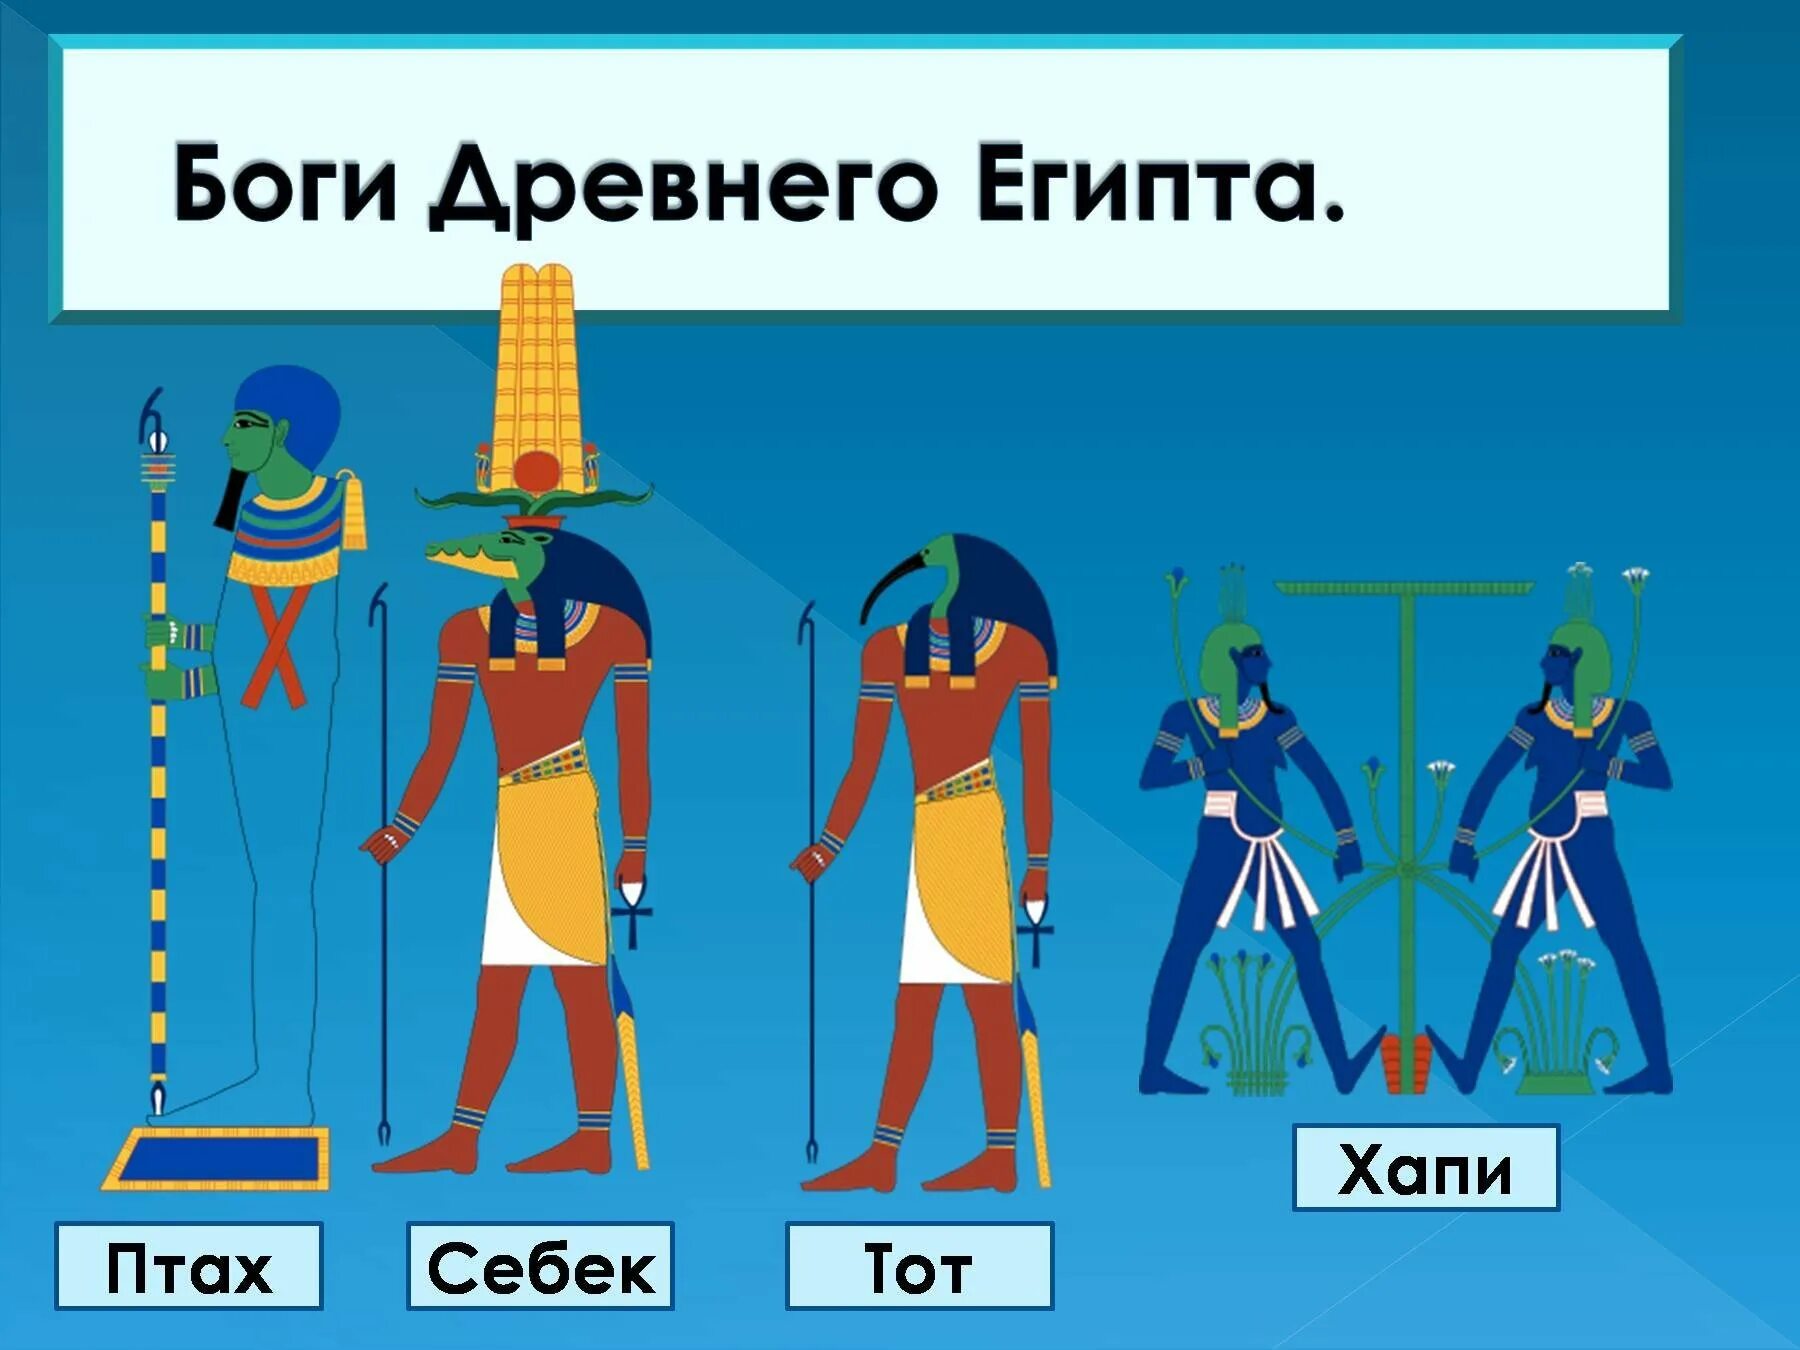 3 боги египта. Хапи Бог Египта. Пантеон древнего Египта. Богиня хапи в древнем Египте. Пантеон богов древнего Египта.